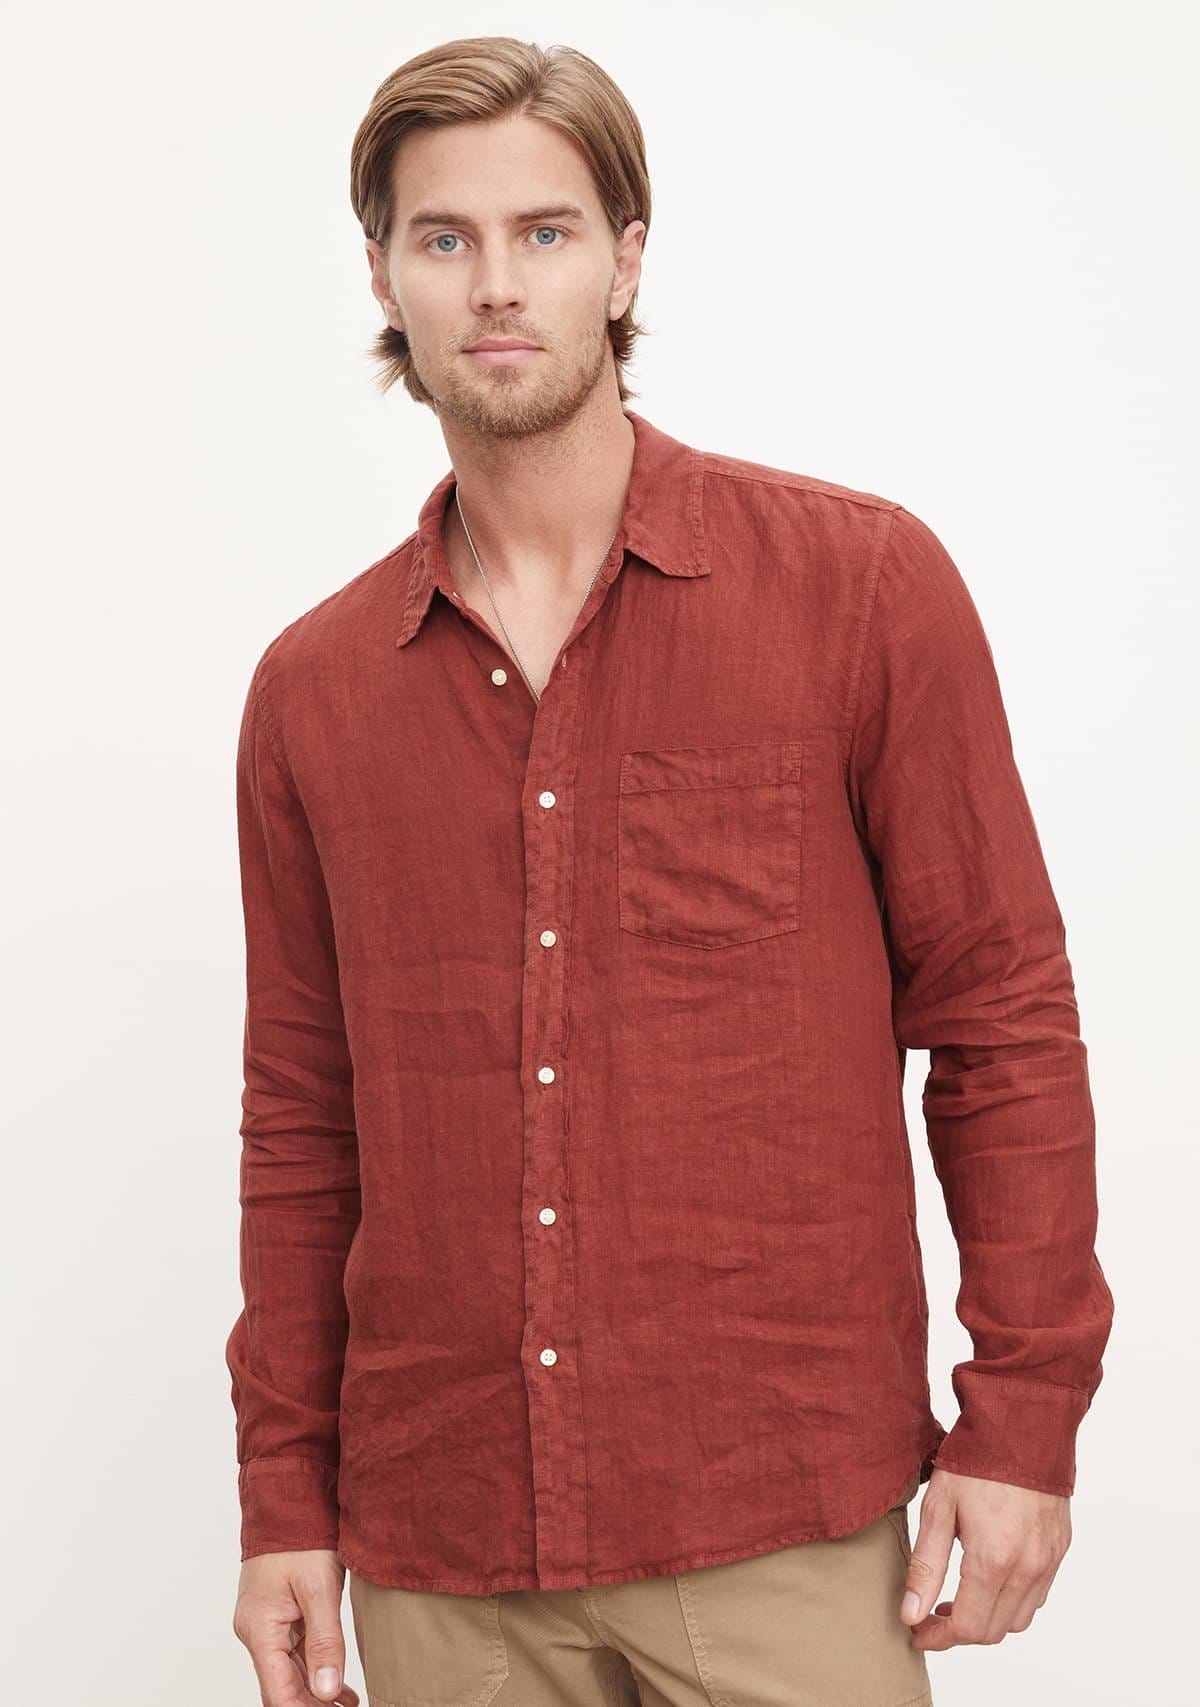 Model wearing the Benton Button-Up Shirt